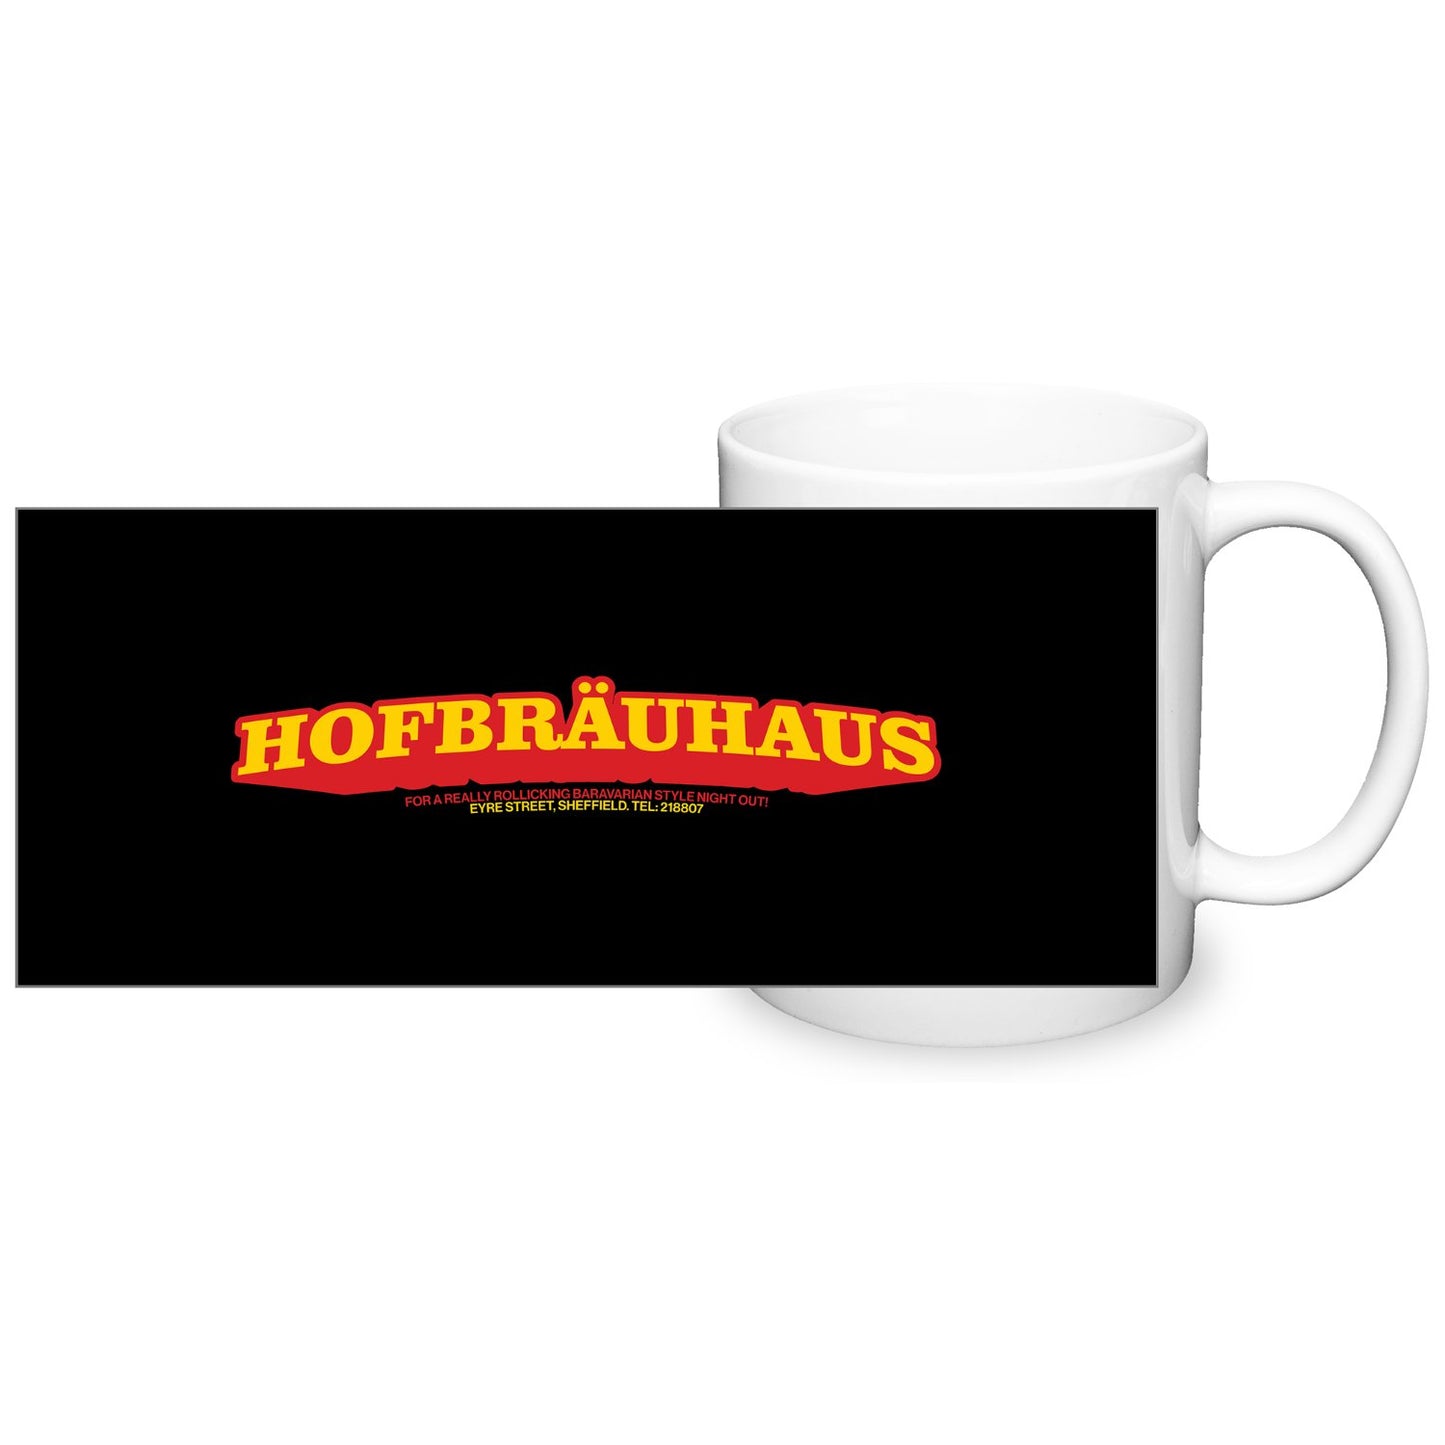 Hofbräuhaus mug - Dirty Stop Outs